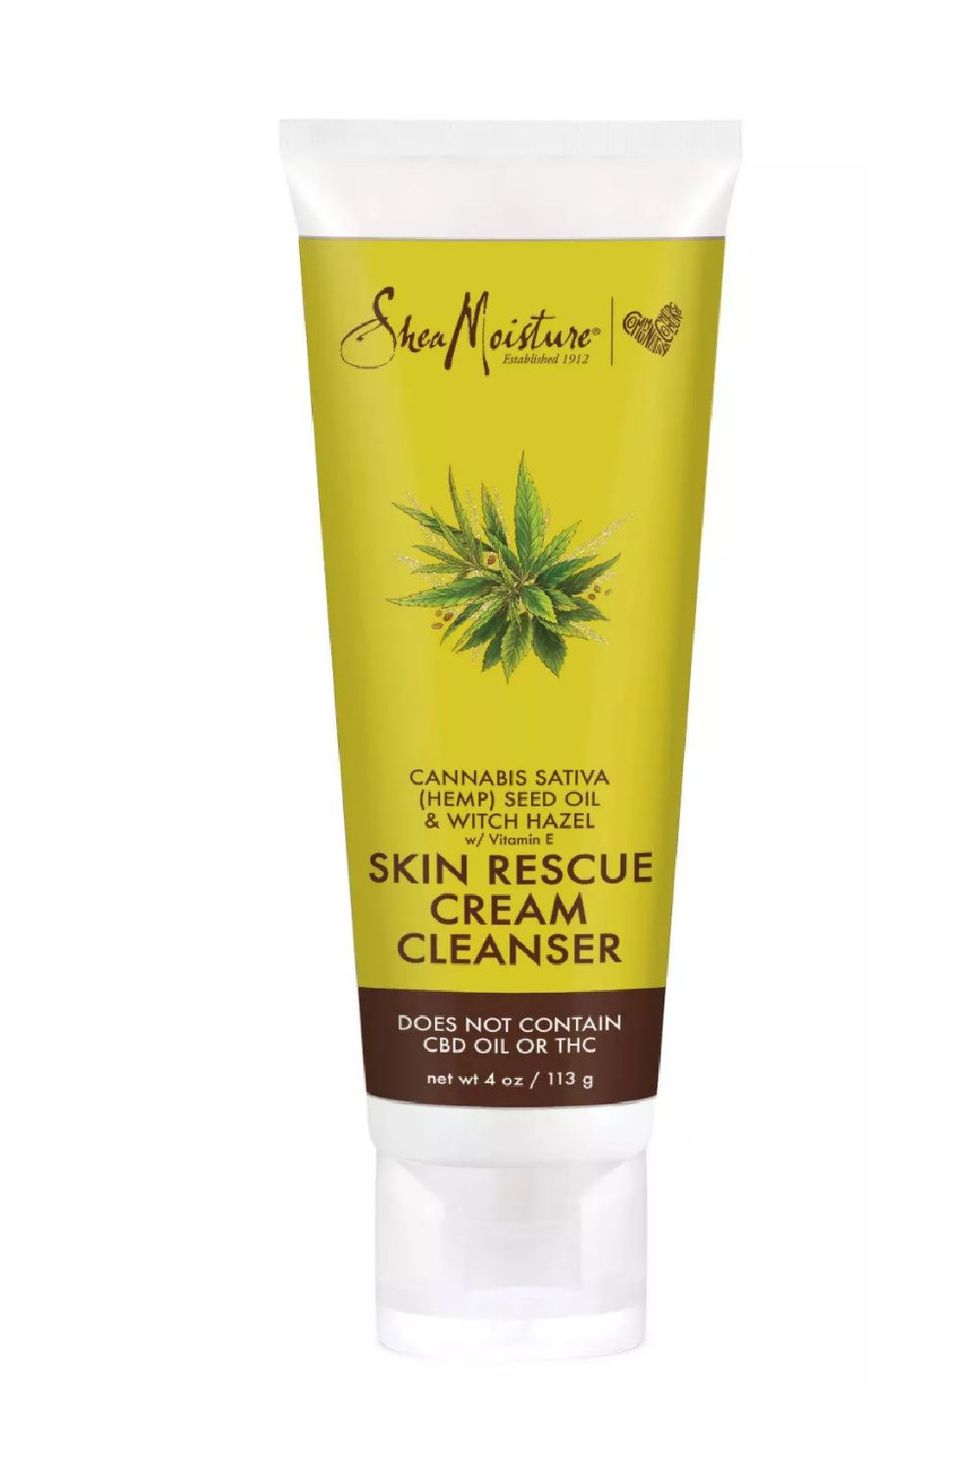 SheaMoisture Cannabis & Witch Hazel Skin Rescue Cream Cleanser